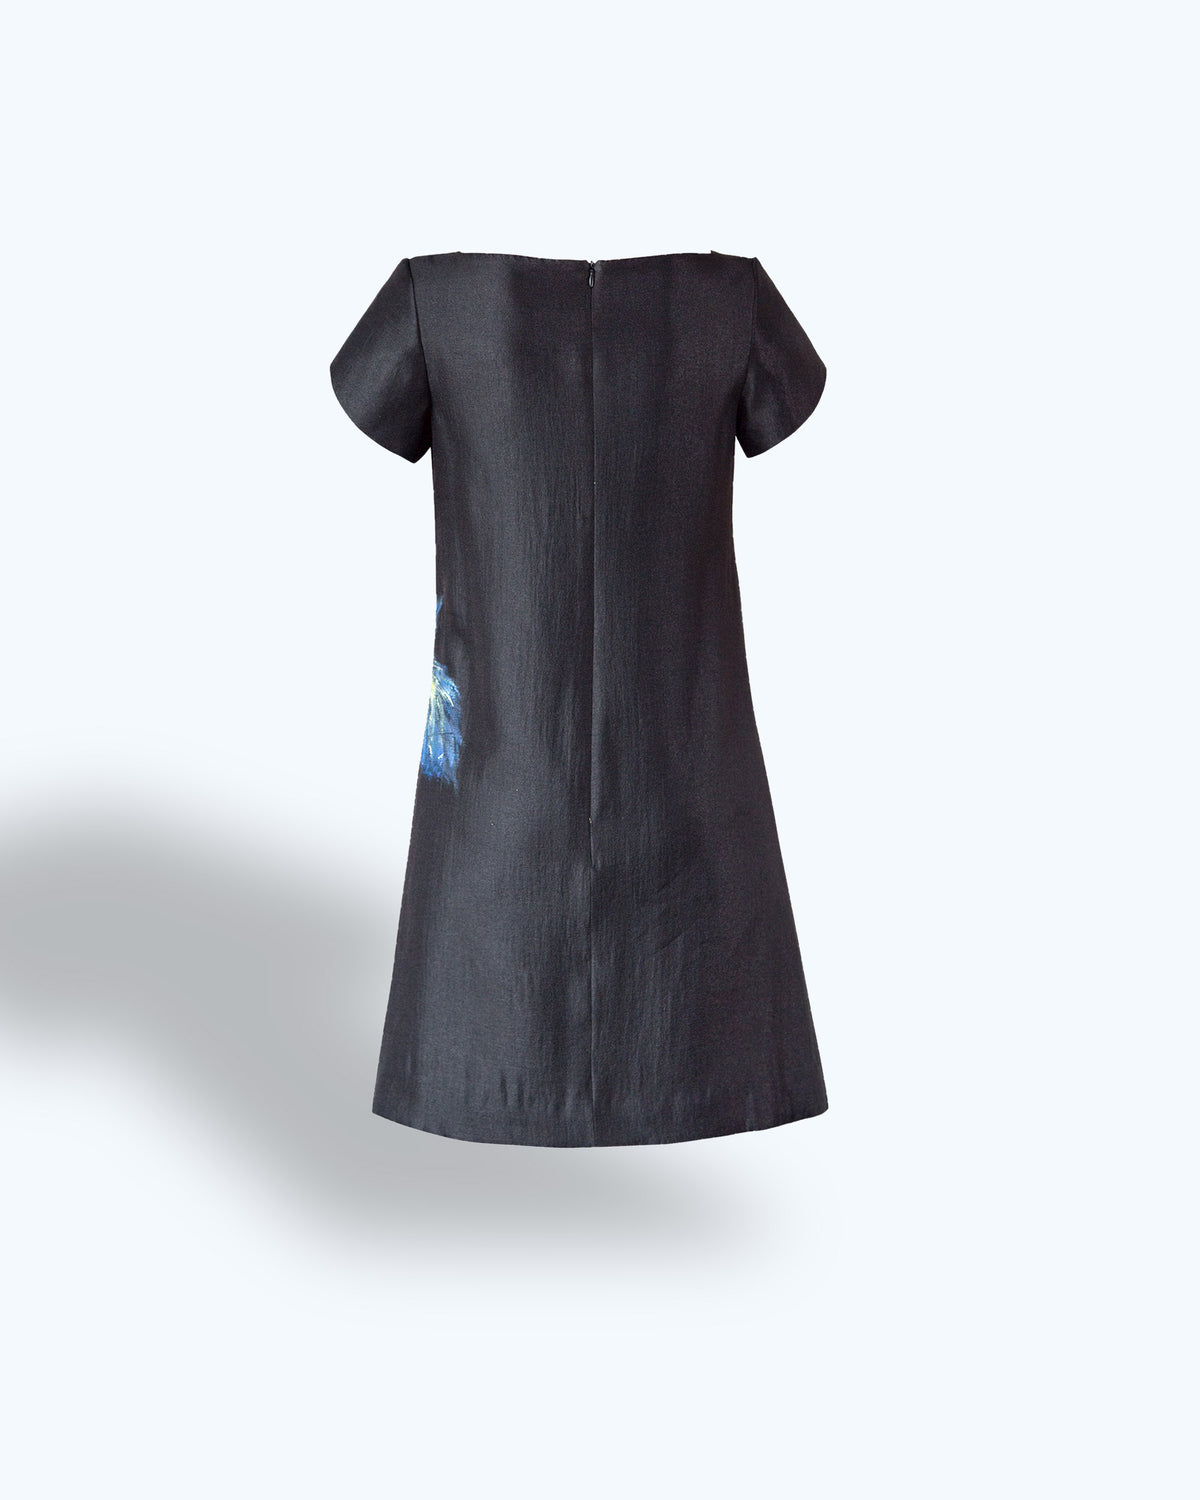 Iris-painted Black Mini Dress